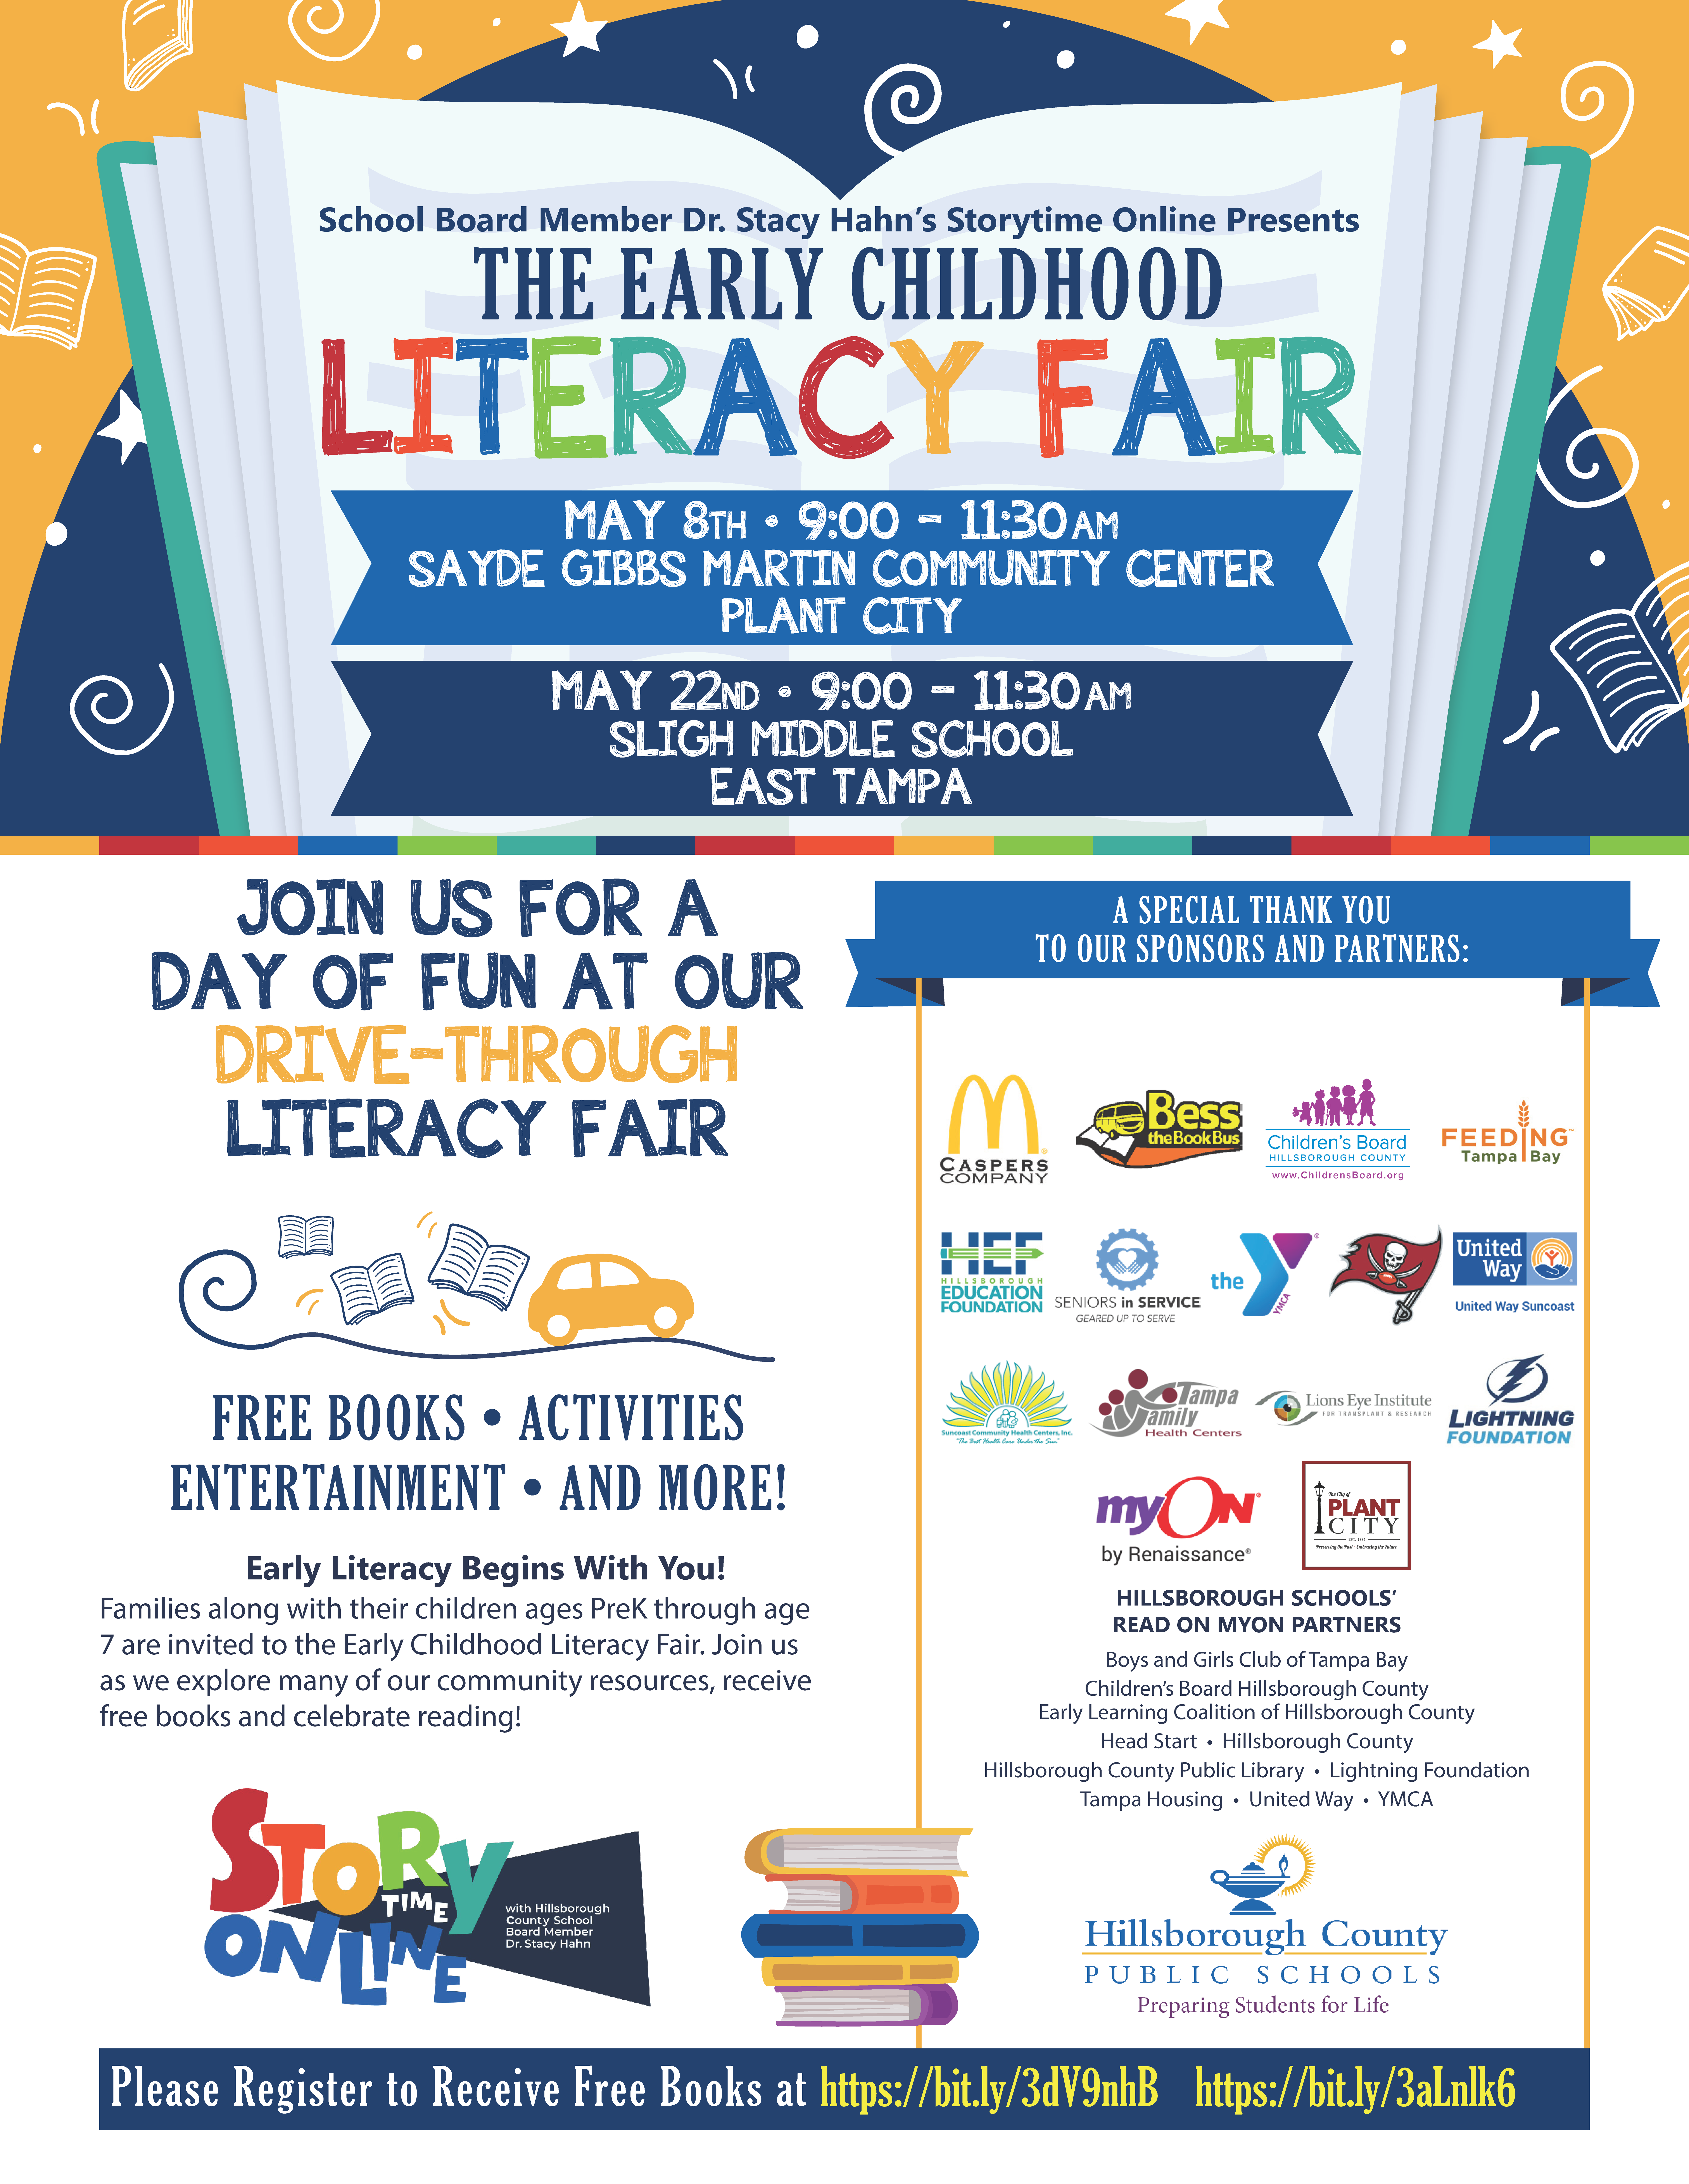 Hillsborough County Public Schools Literacy Fair at Sligh Middle School